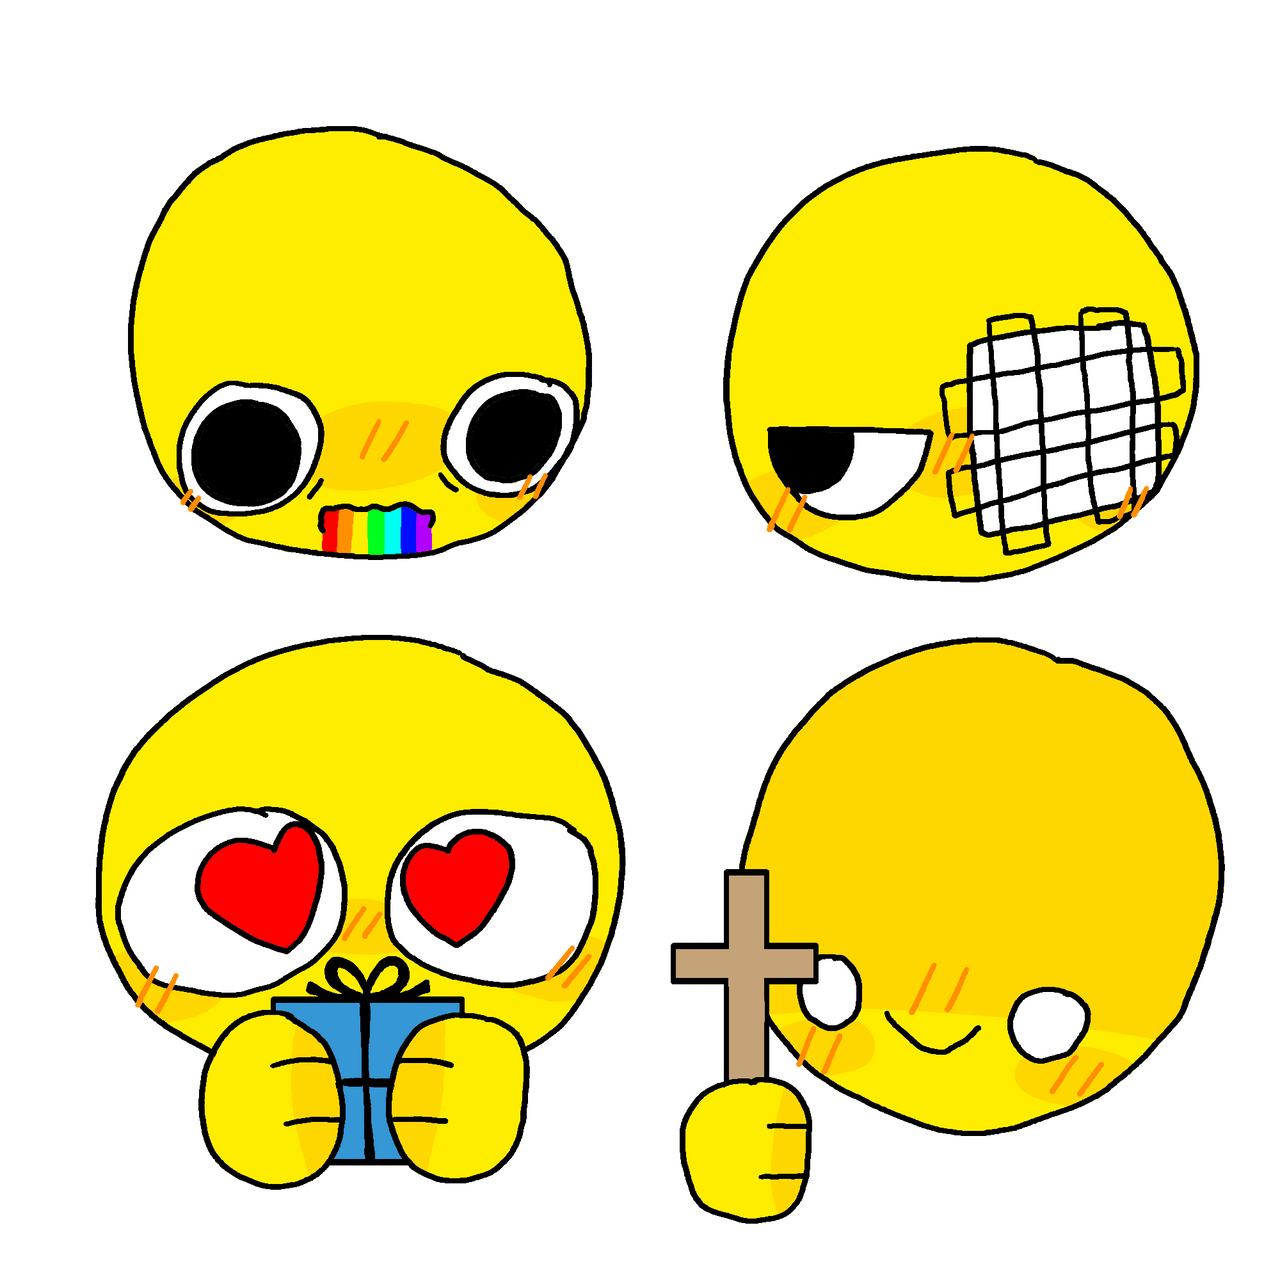 1 / cursed emojis by yankaze on DeviantArt